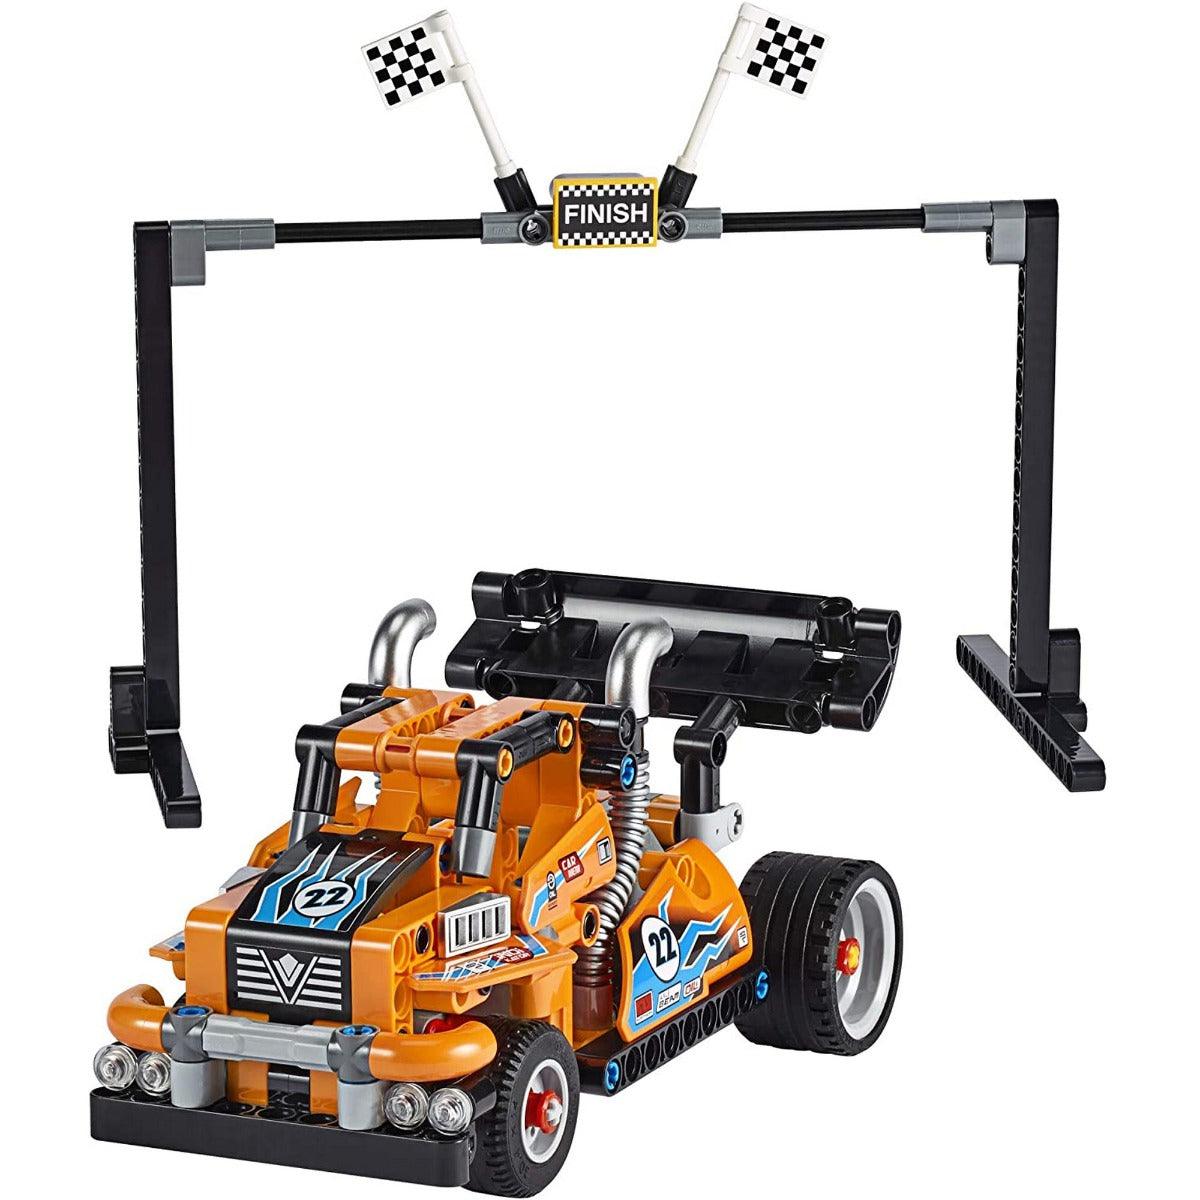 LEGO Technic Race Truck